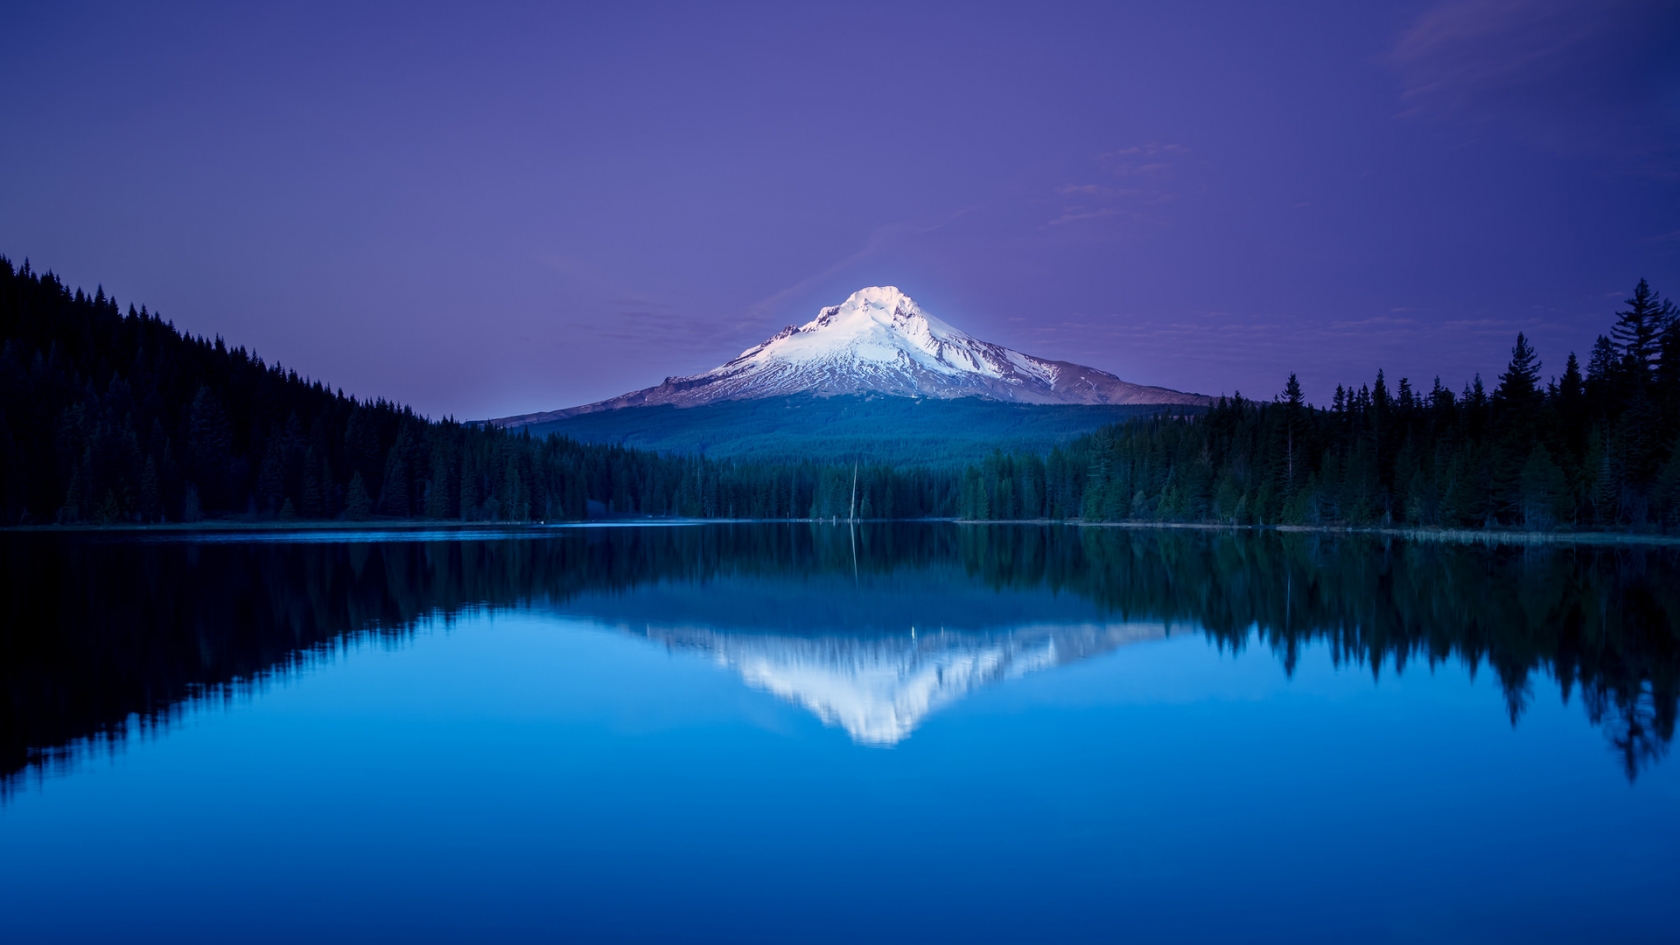 Amazing Mountain Lake Reflection  for 1680 x 945 HDTV resolution